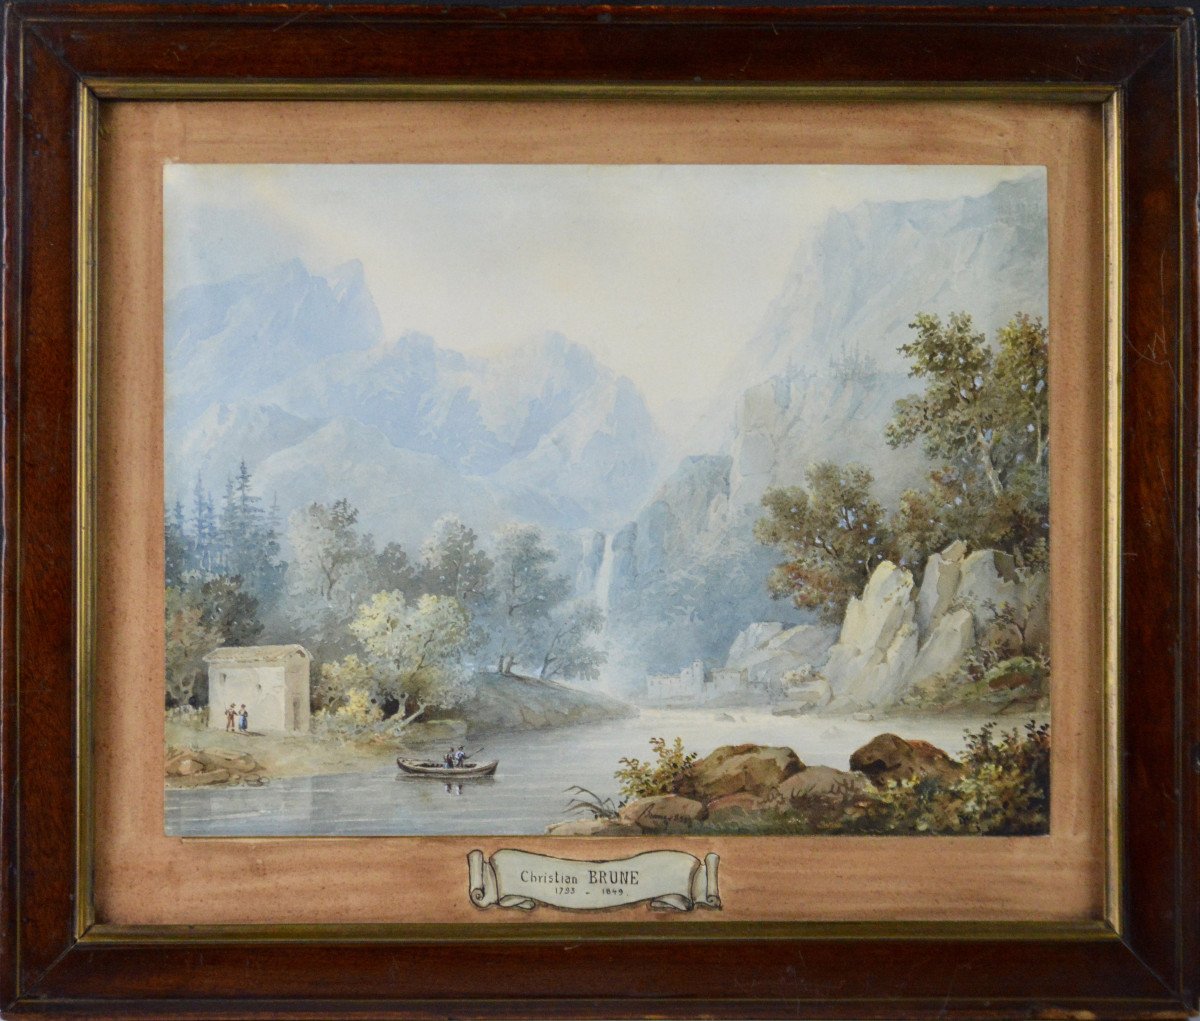 Christian Brune 1793-1849.  "Paysage montagneux."